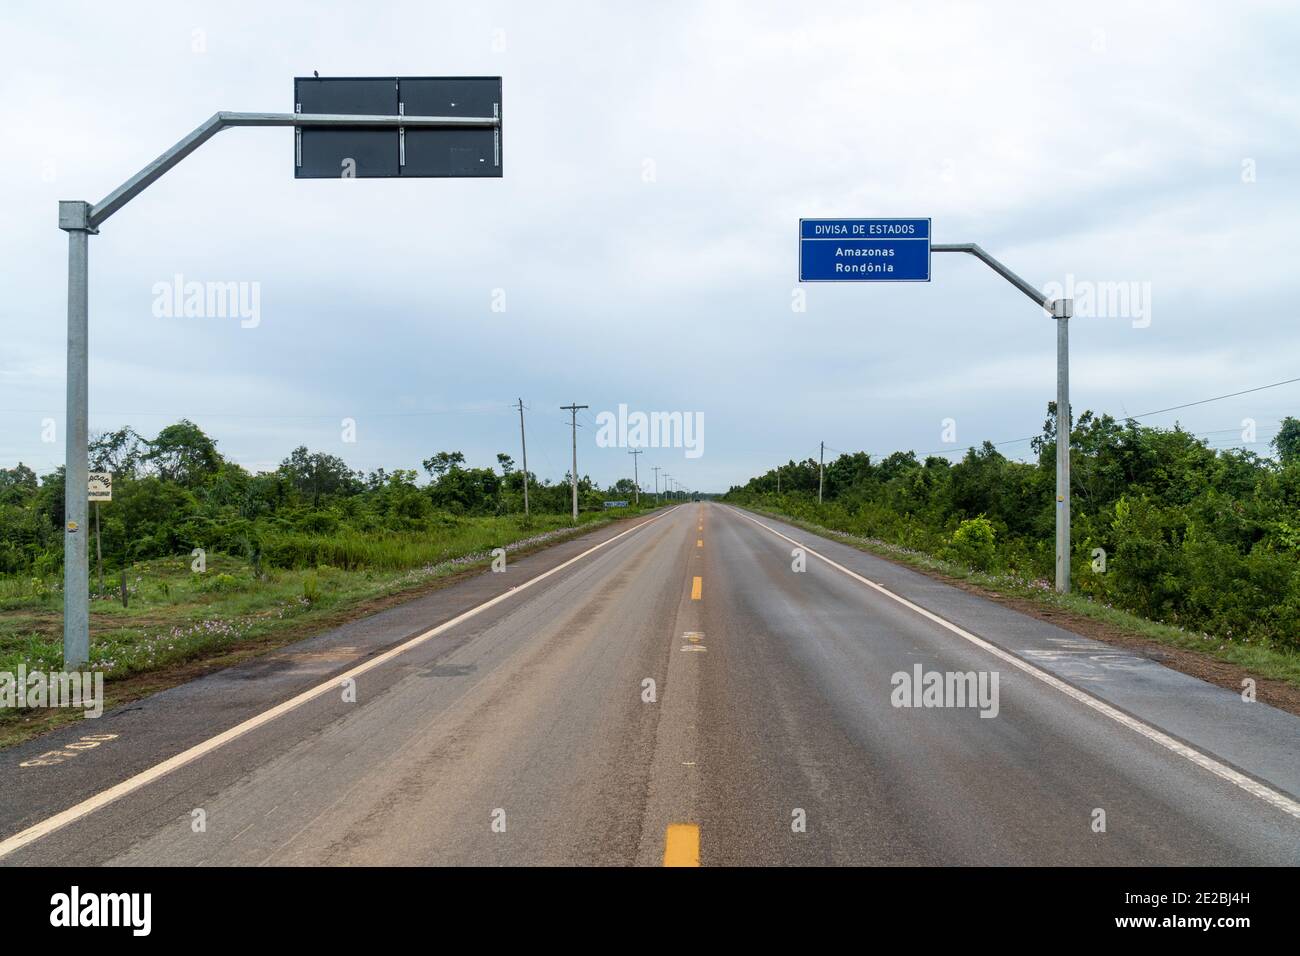 Porto Velho, RO / Brazil December 15, 2020 : View of BR 319 road and  border of Rondonia and Amazonas state sign, Amazon rainforest, Brazil. Stock Photo